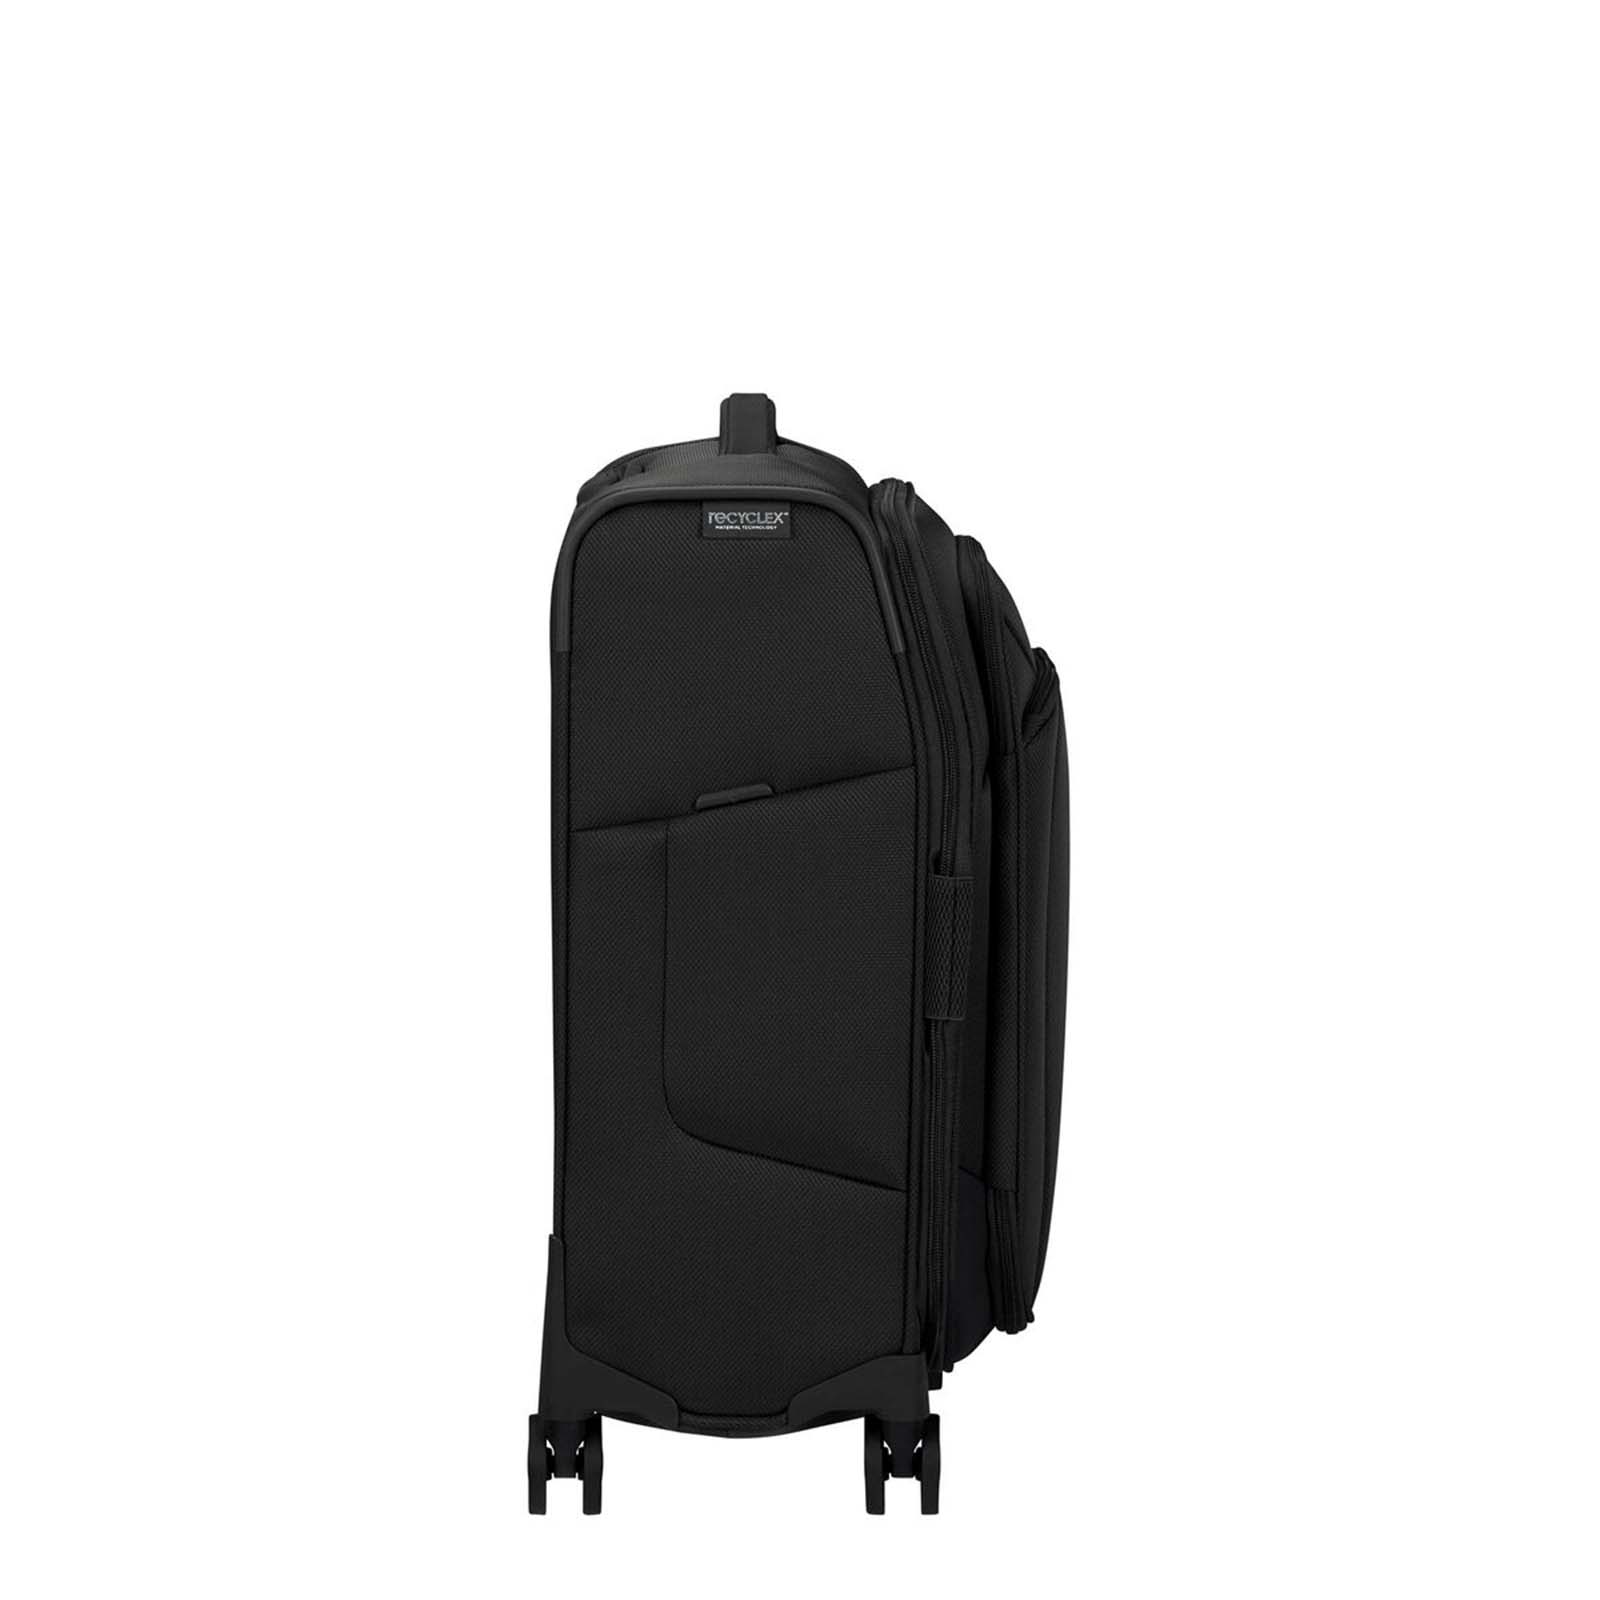 Samsonite-Respark-55cm-Carry-On-Suitcase-Ozone-Black-Side